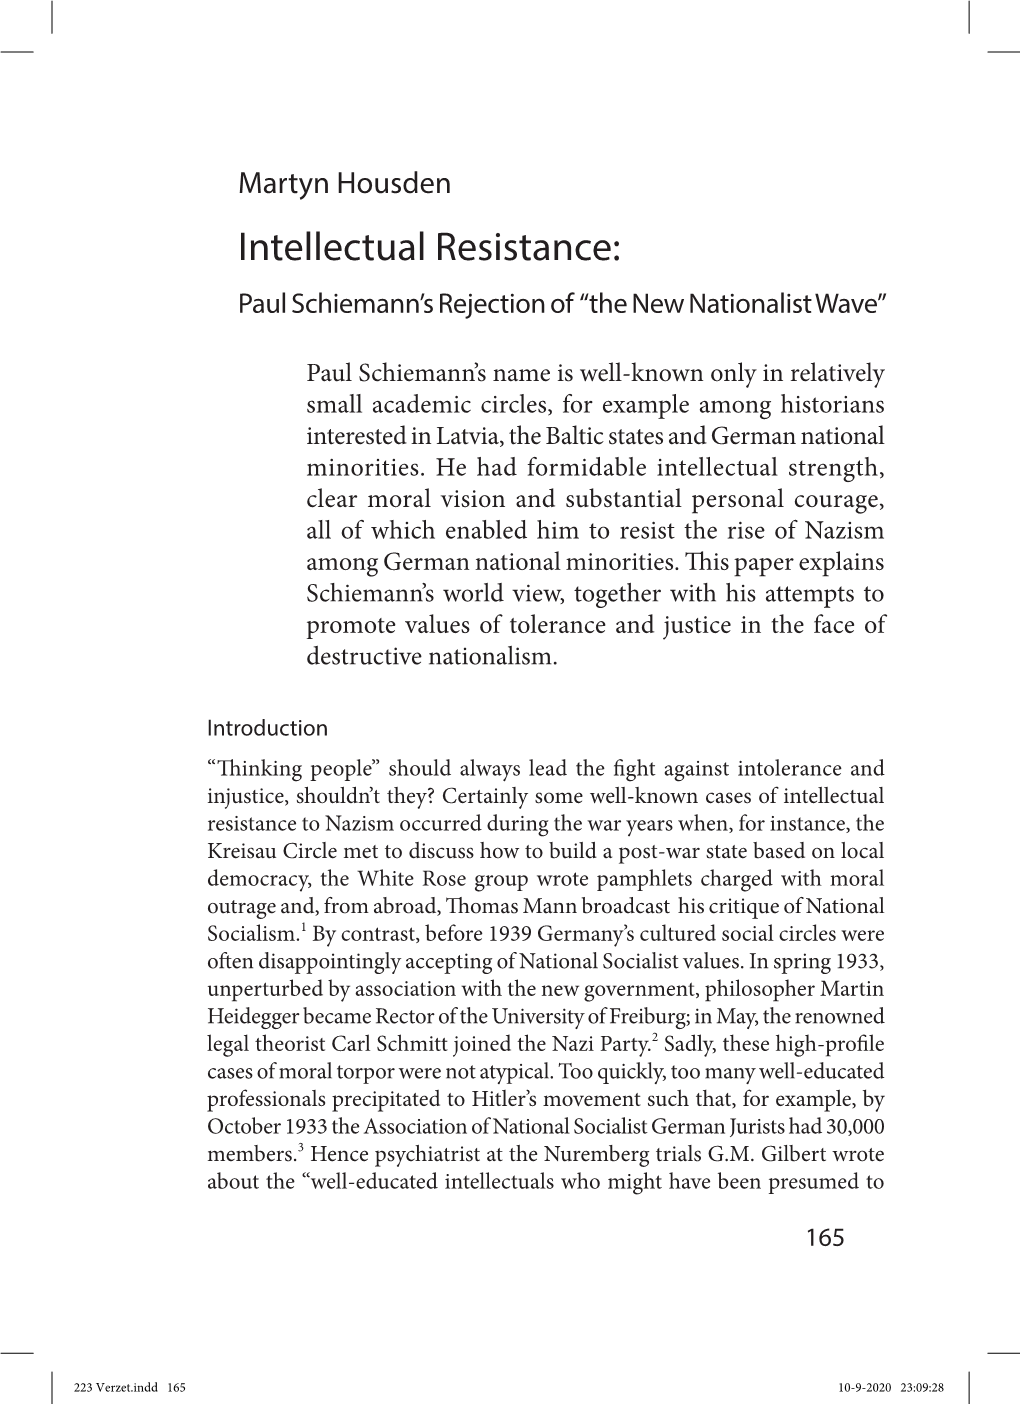 Martyn Housden Intellectual Resistance: Paul Schiemann’S Rejection of “The New Nationalist Wave”